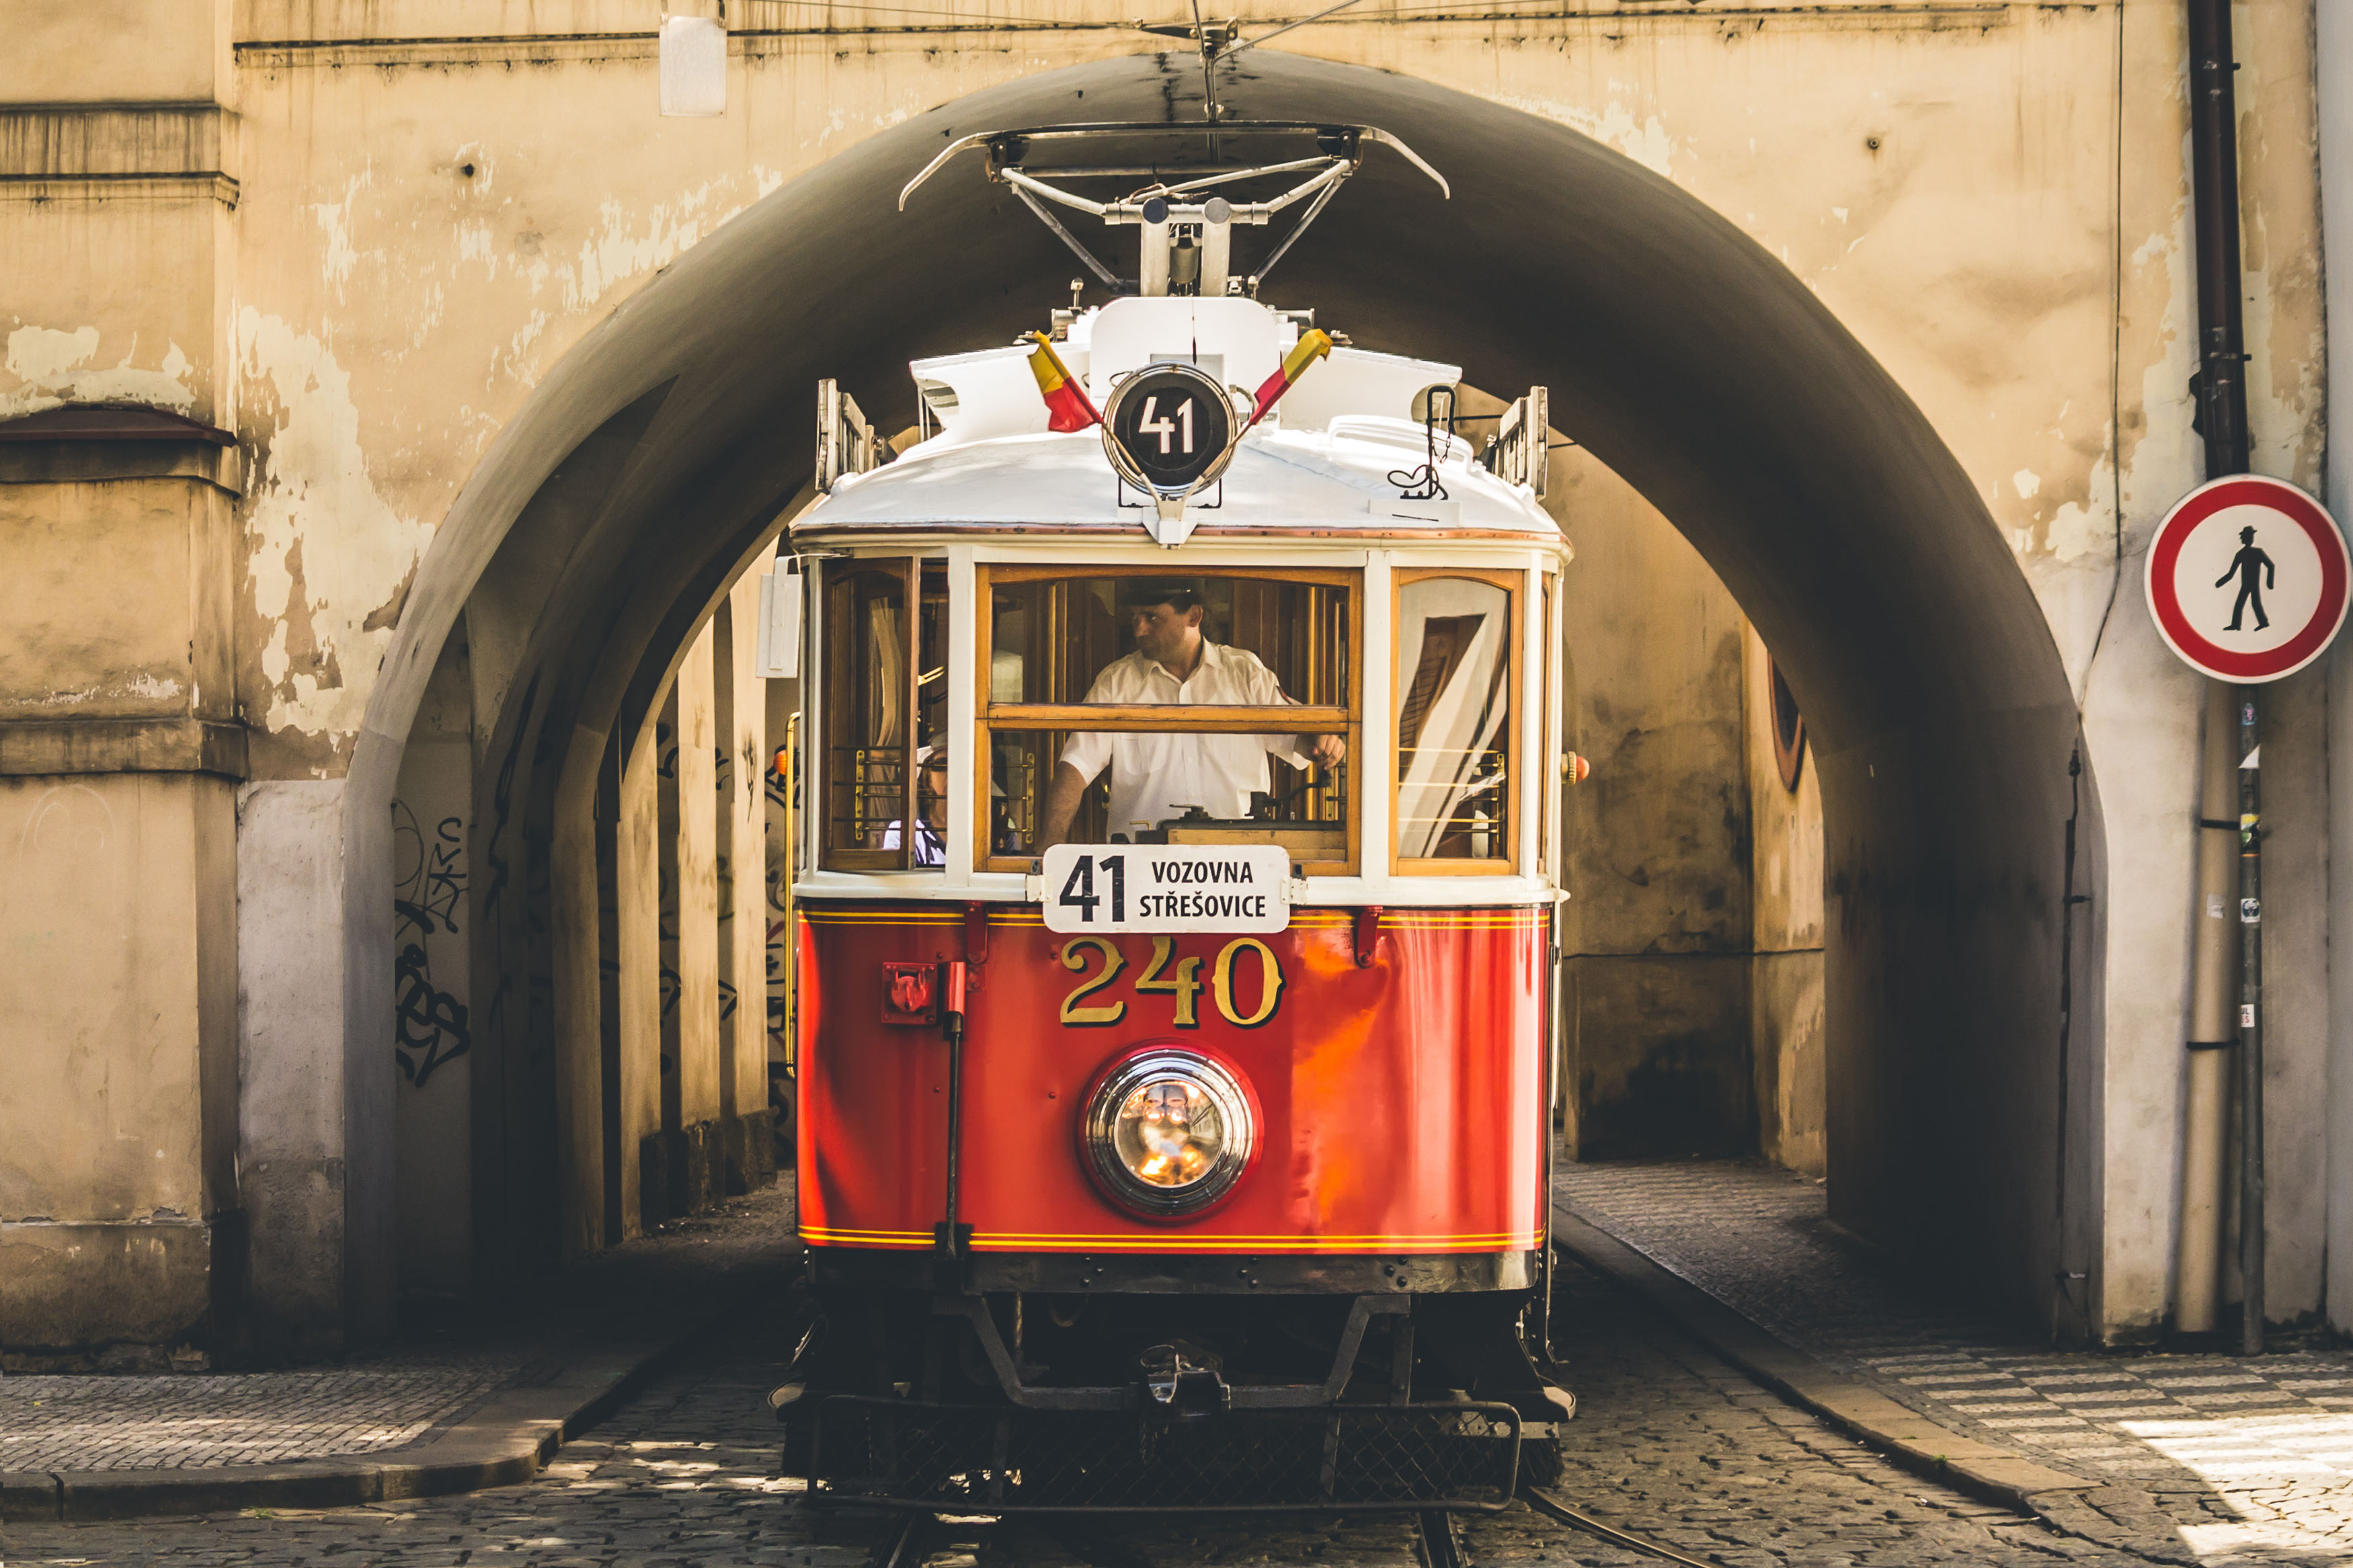 tram pulling through an arch in prague